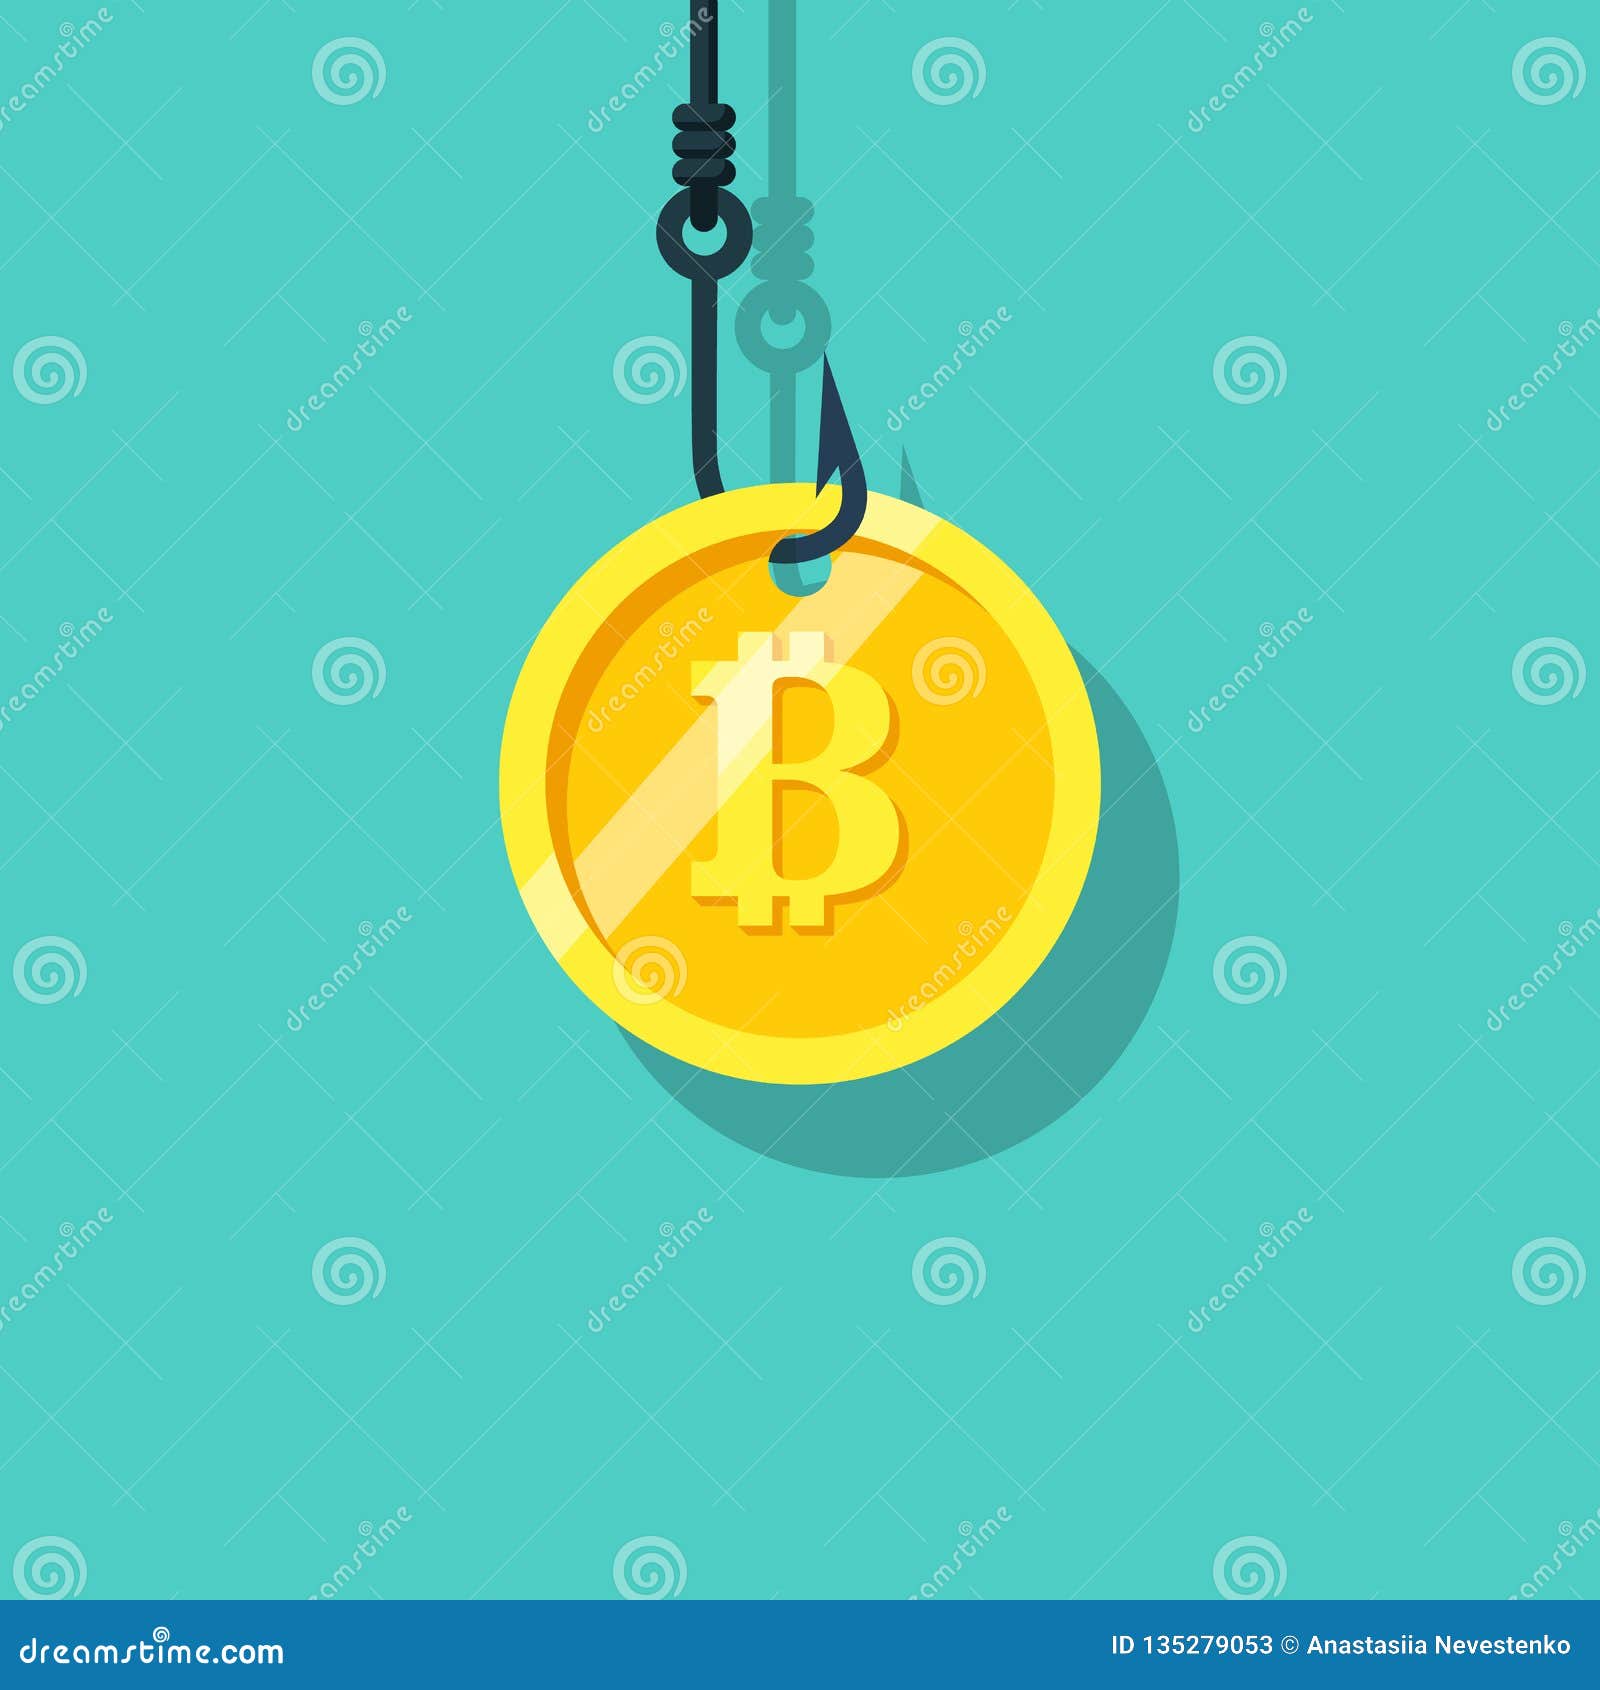 commercio bitcoin con leva